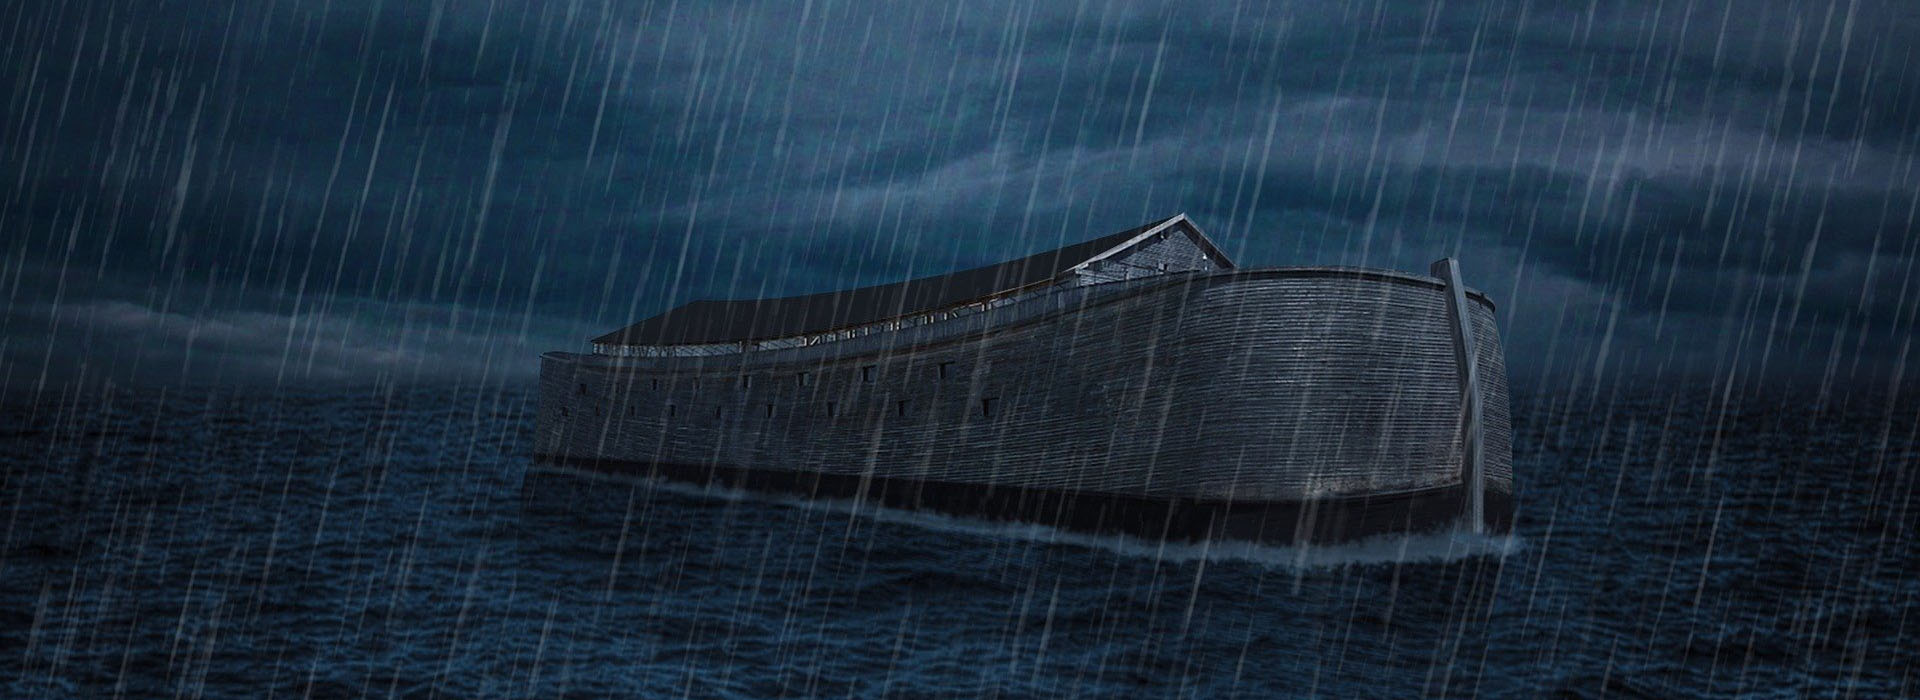 Noah's Ark helped